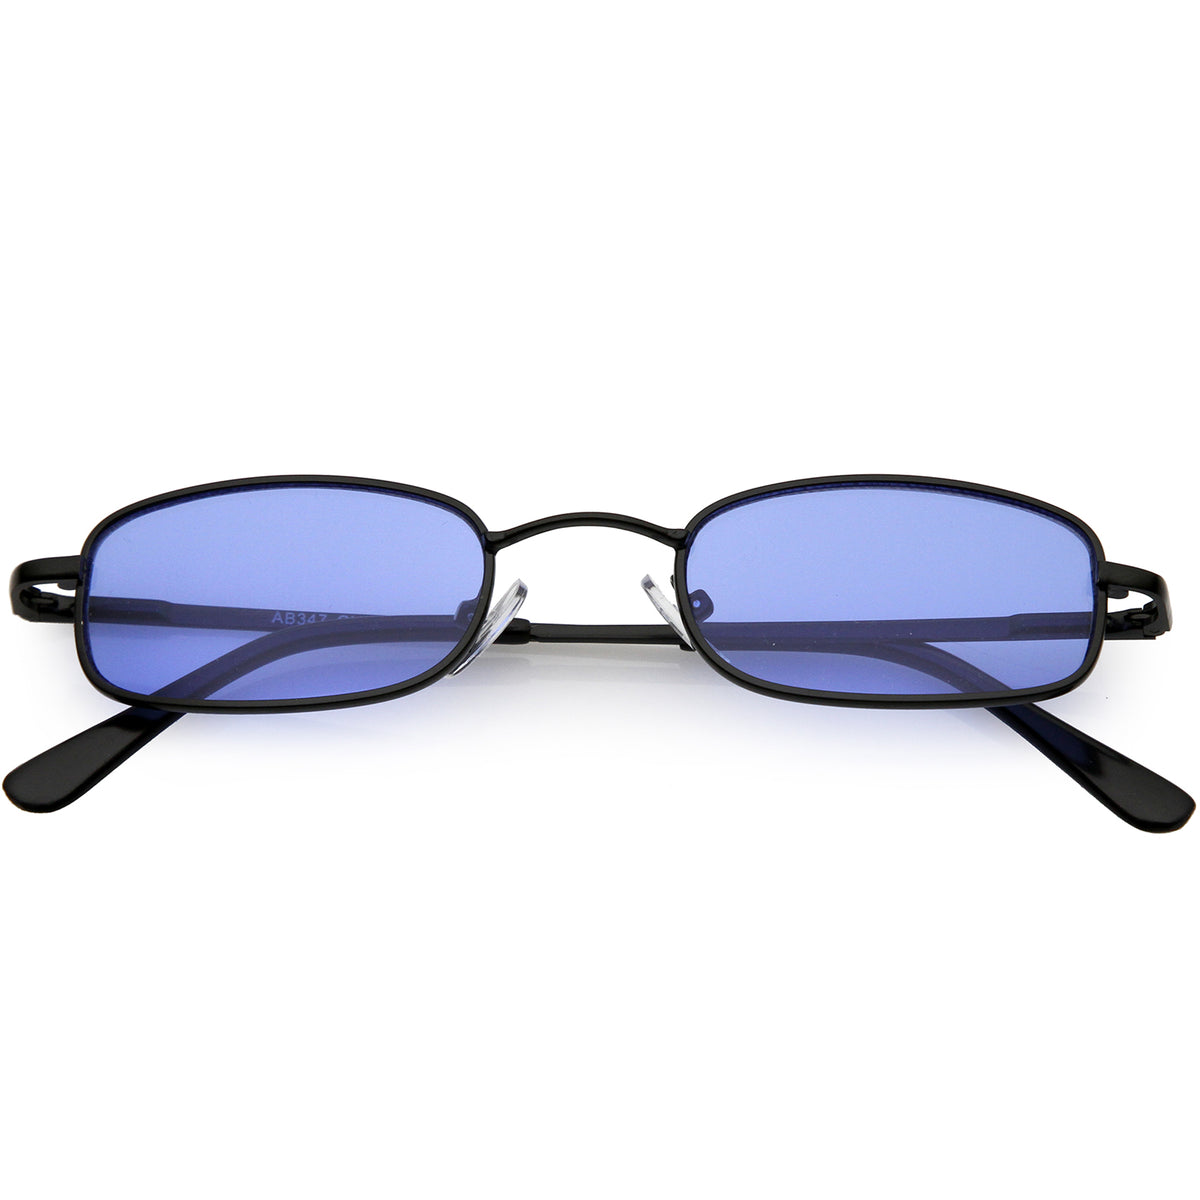 90s Small Rectangle Sunglasses Slim Arms Color Tinted Lens 45mm Sunglassla 